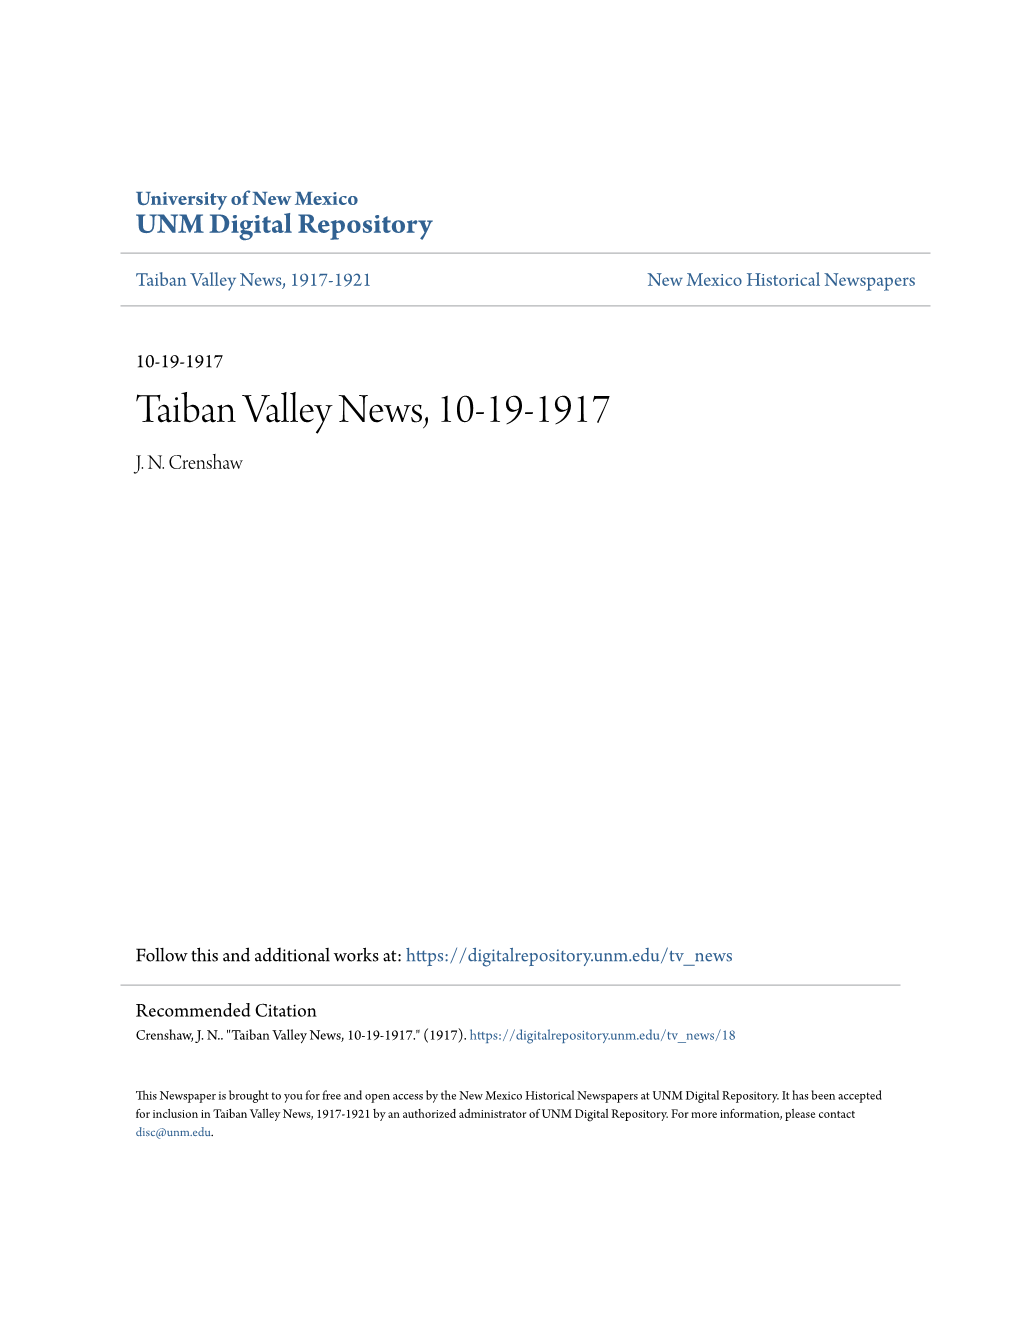 Taiban Valley News, 10-19-1917 J